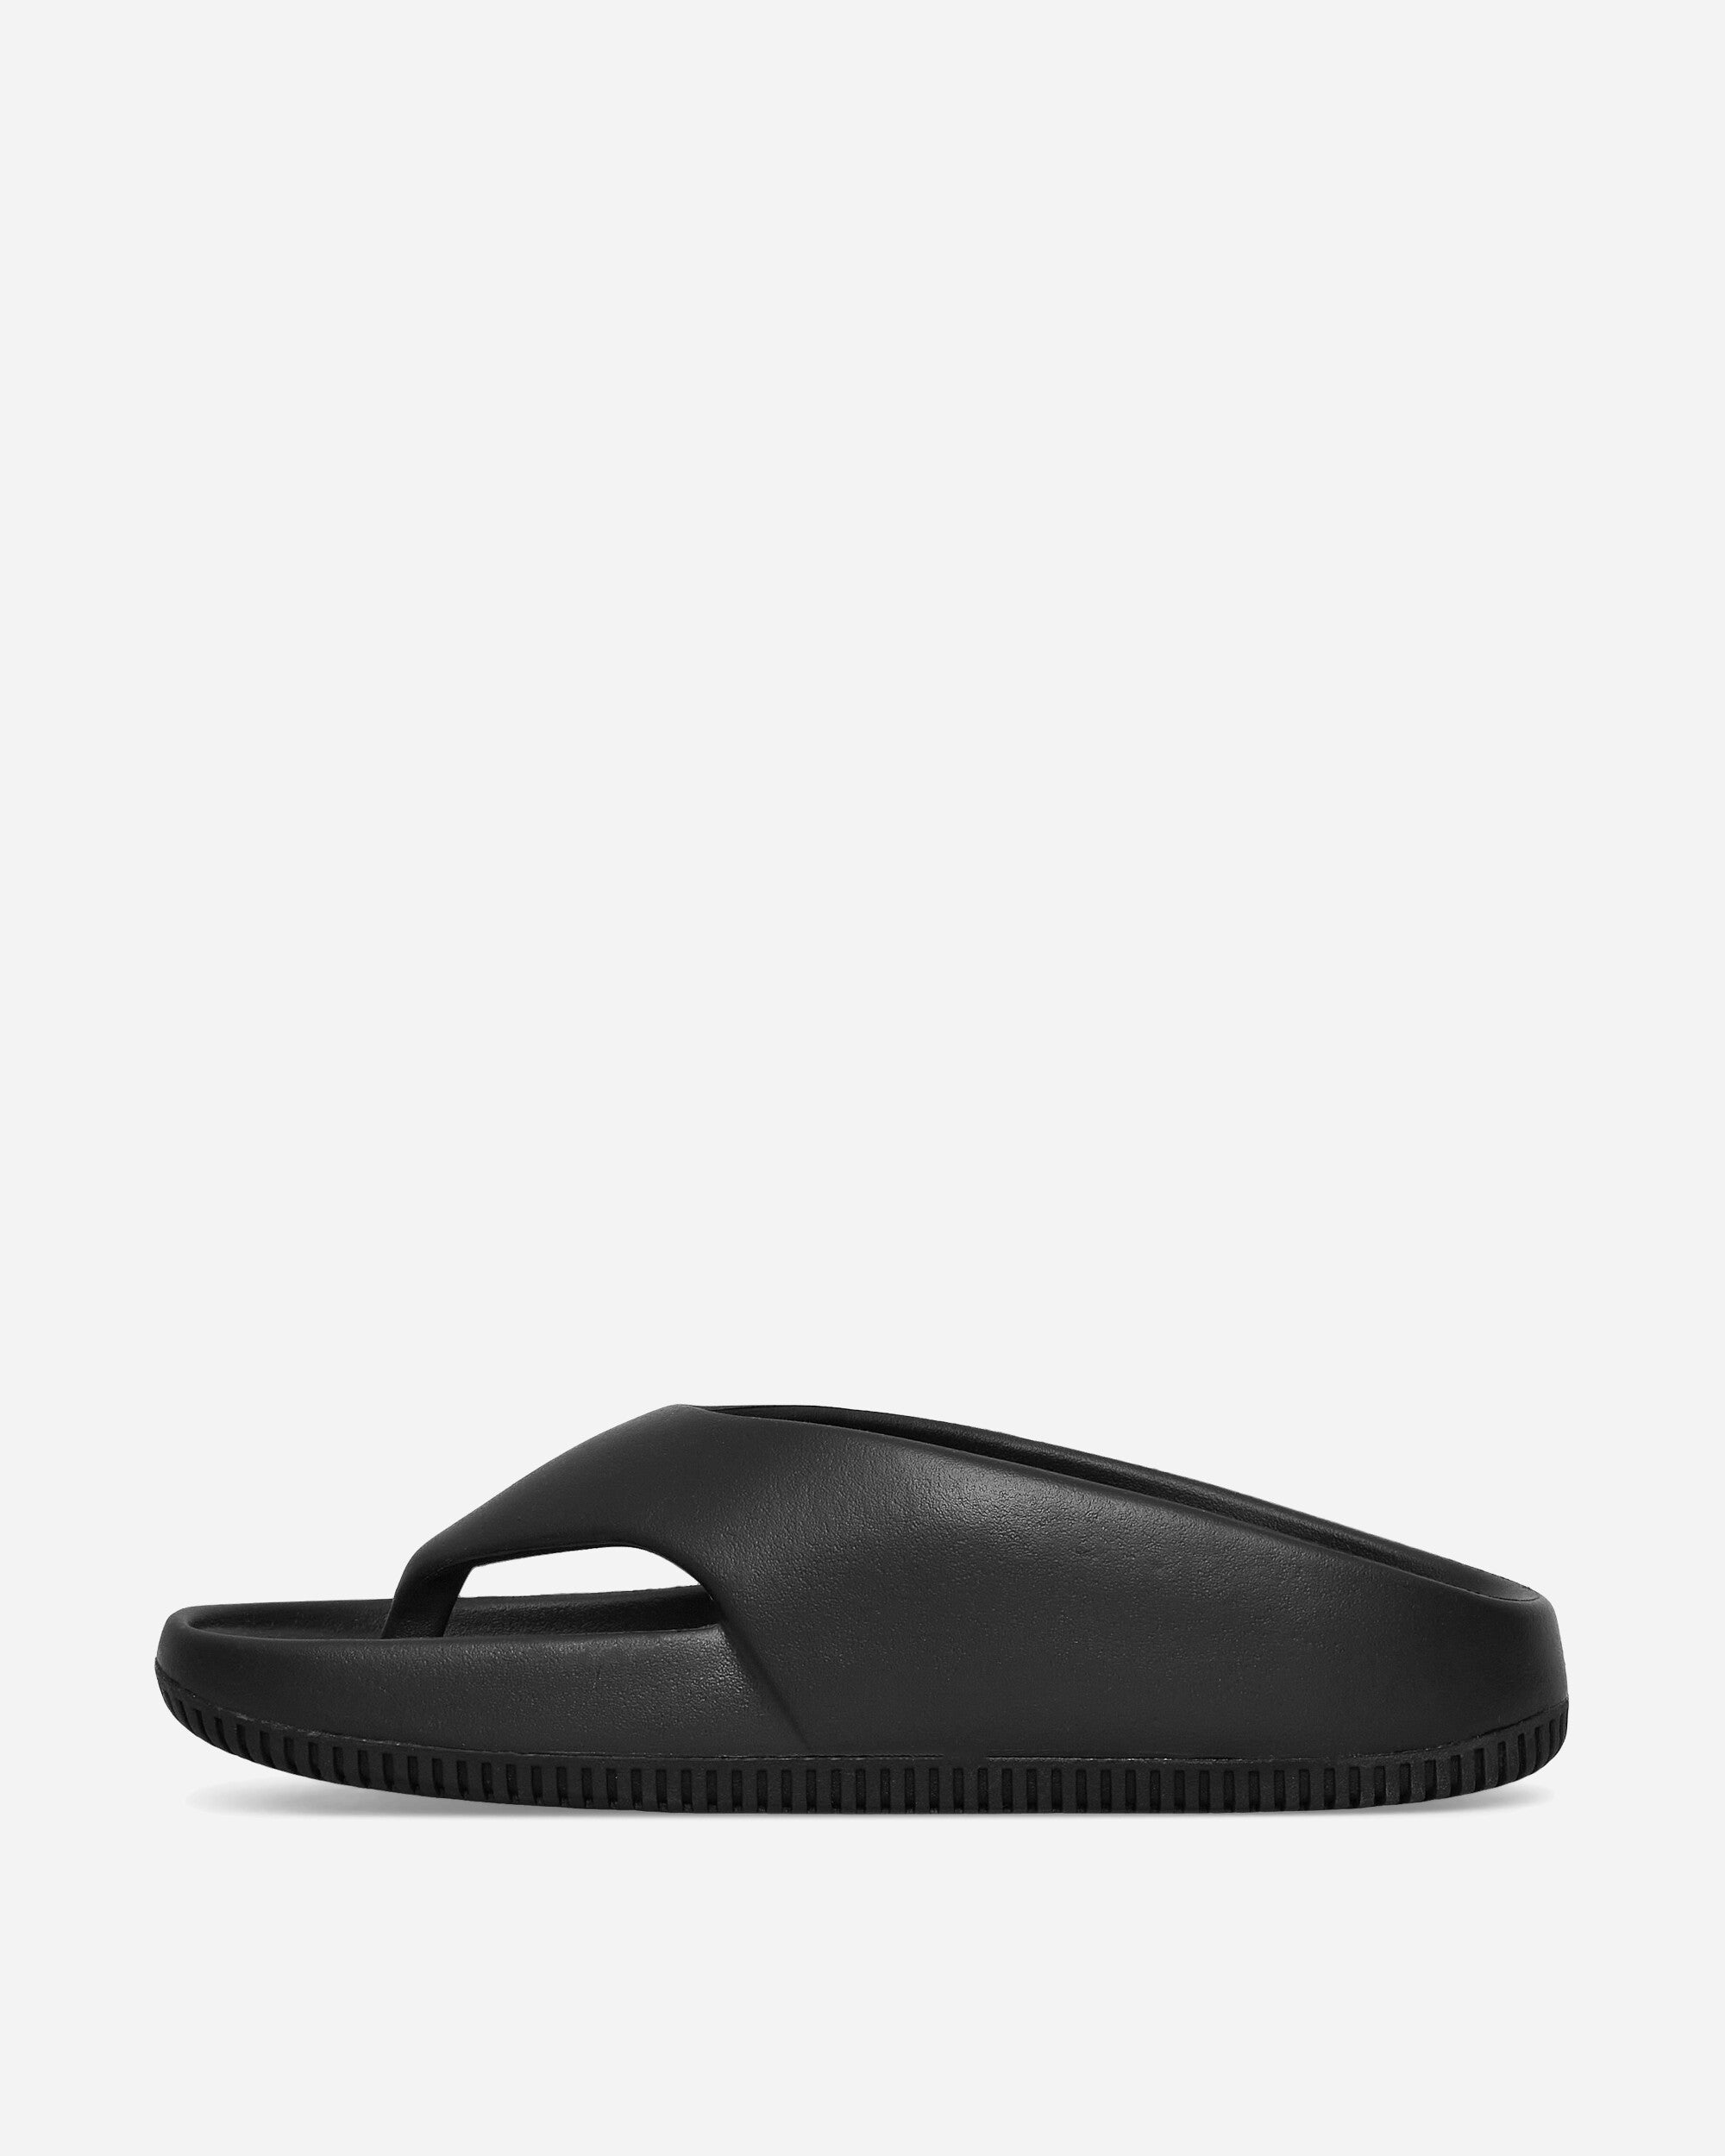 Nike Wmns Nike Calm Flip Flop Black/Black Sneakers Low FD4115-001